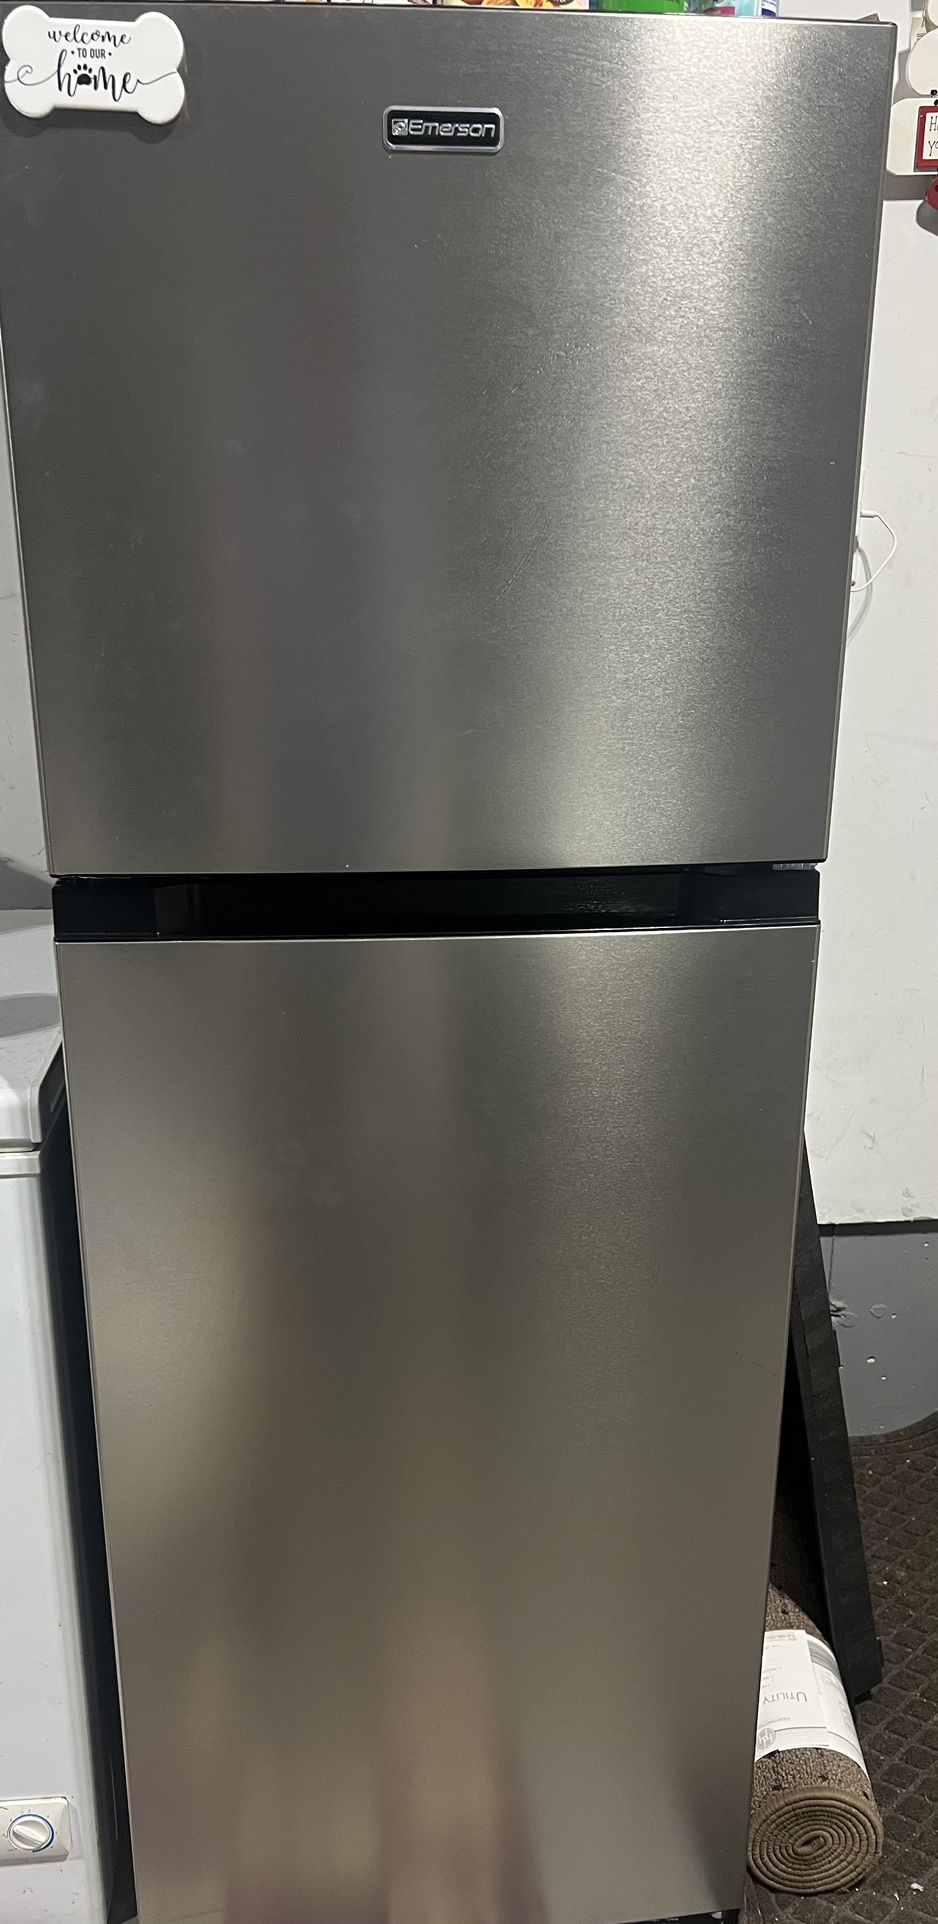 Emerson 10.1 cu.ft stainless steel 2 door refrigerator got for $400